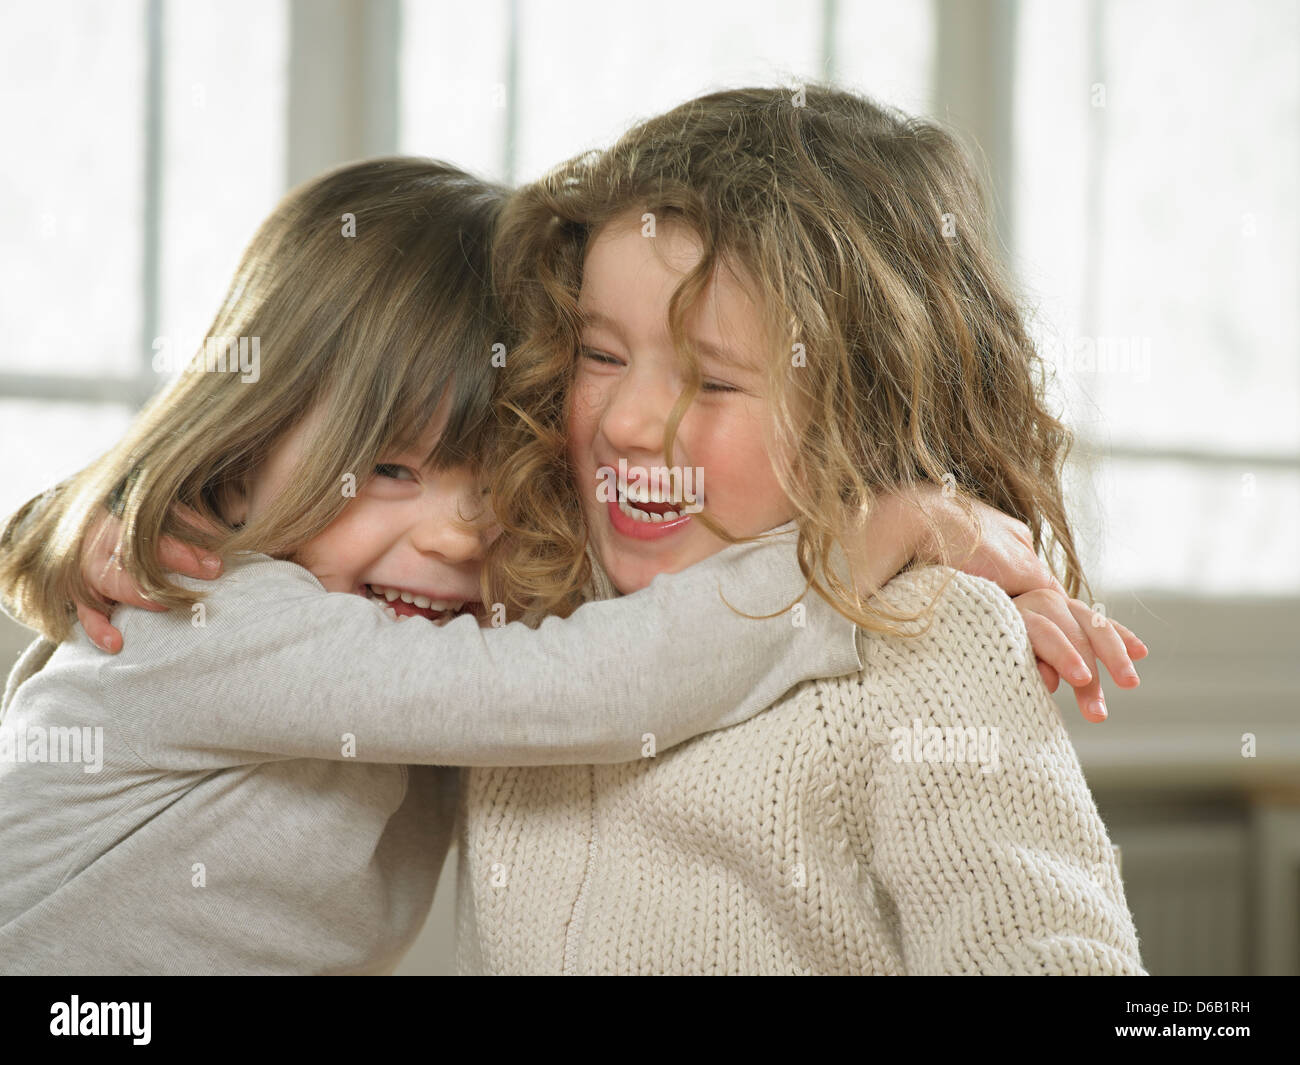 Smiling girls hugging indoors Stock Photo